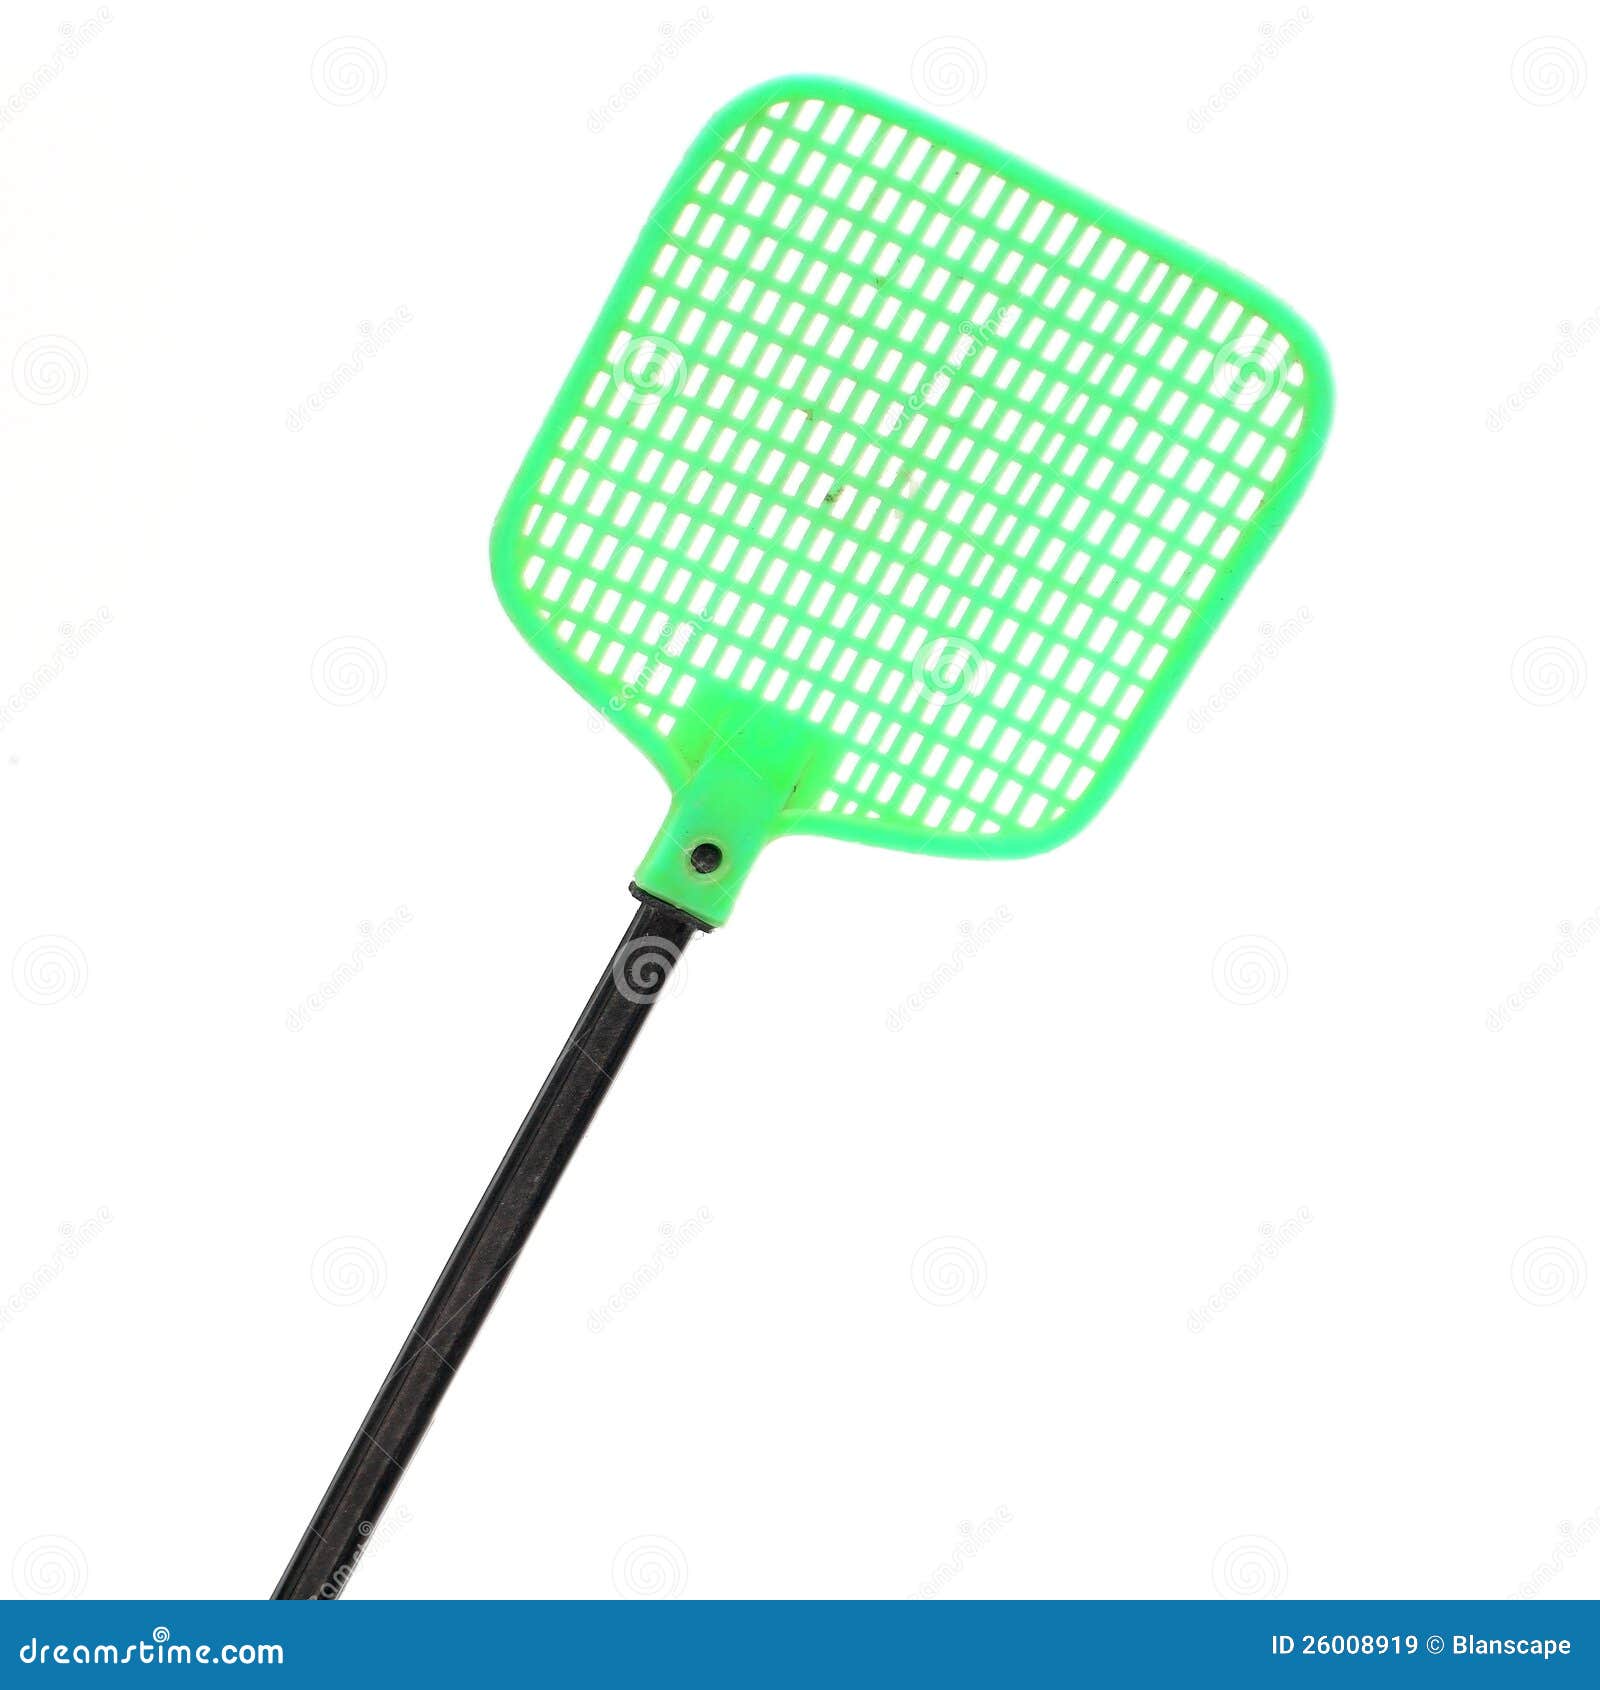 fly swatter clip art - photo #13